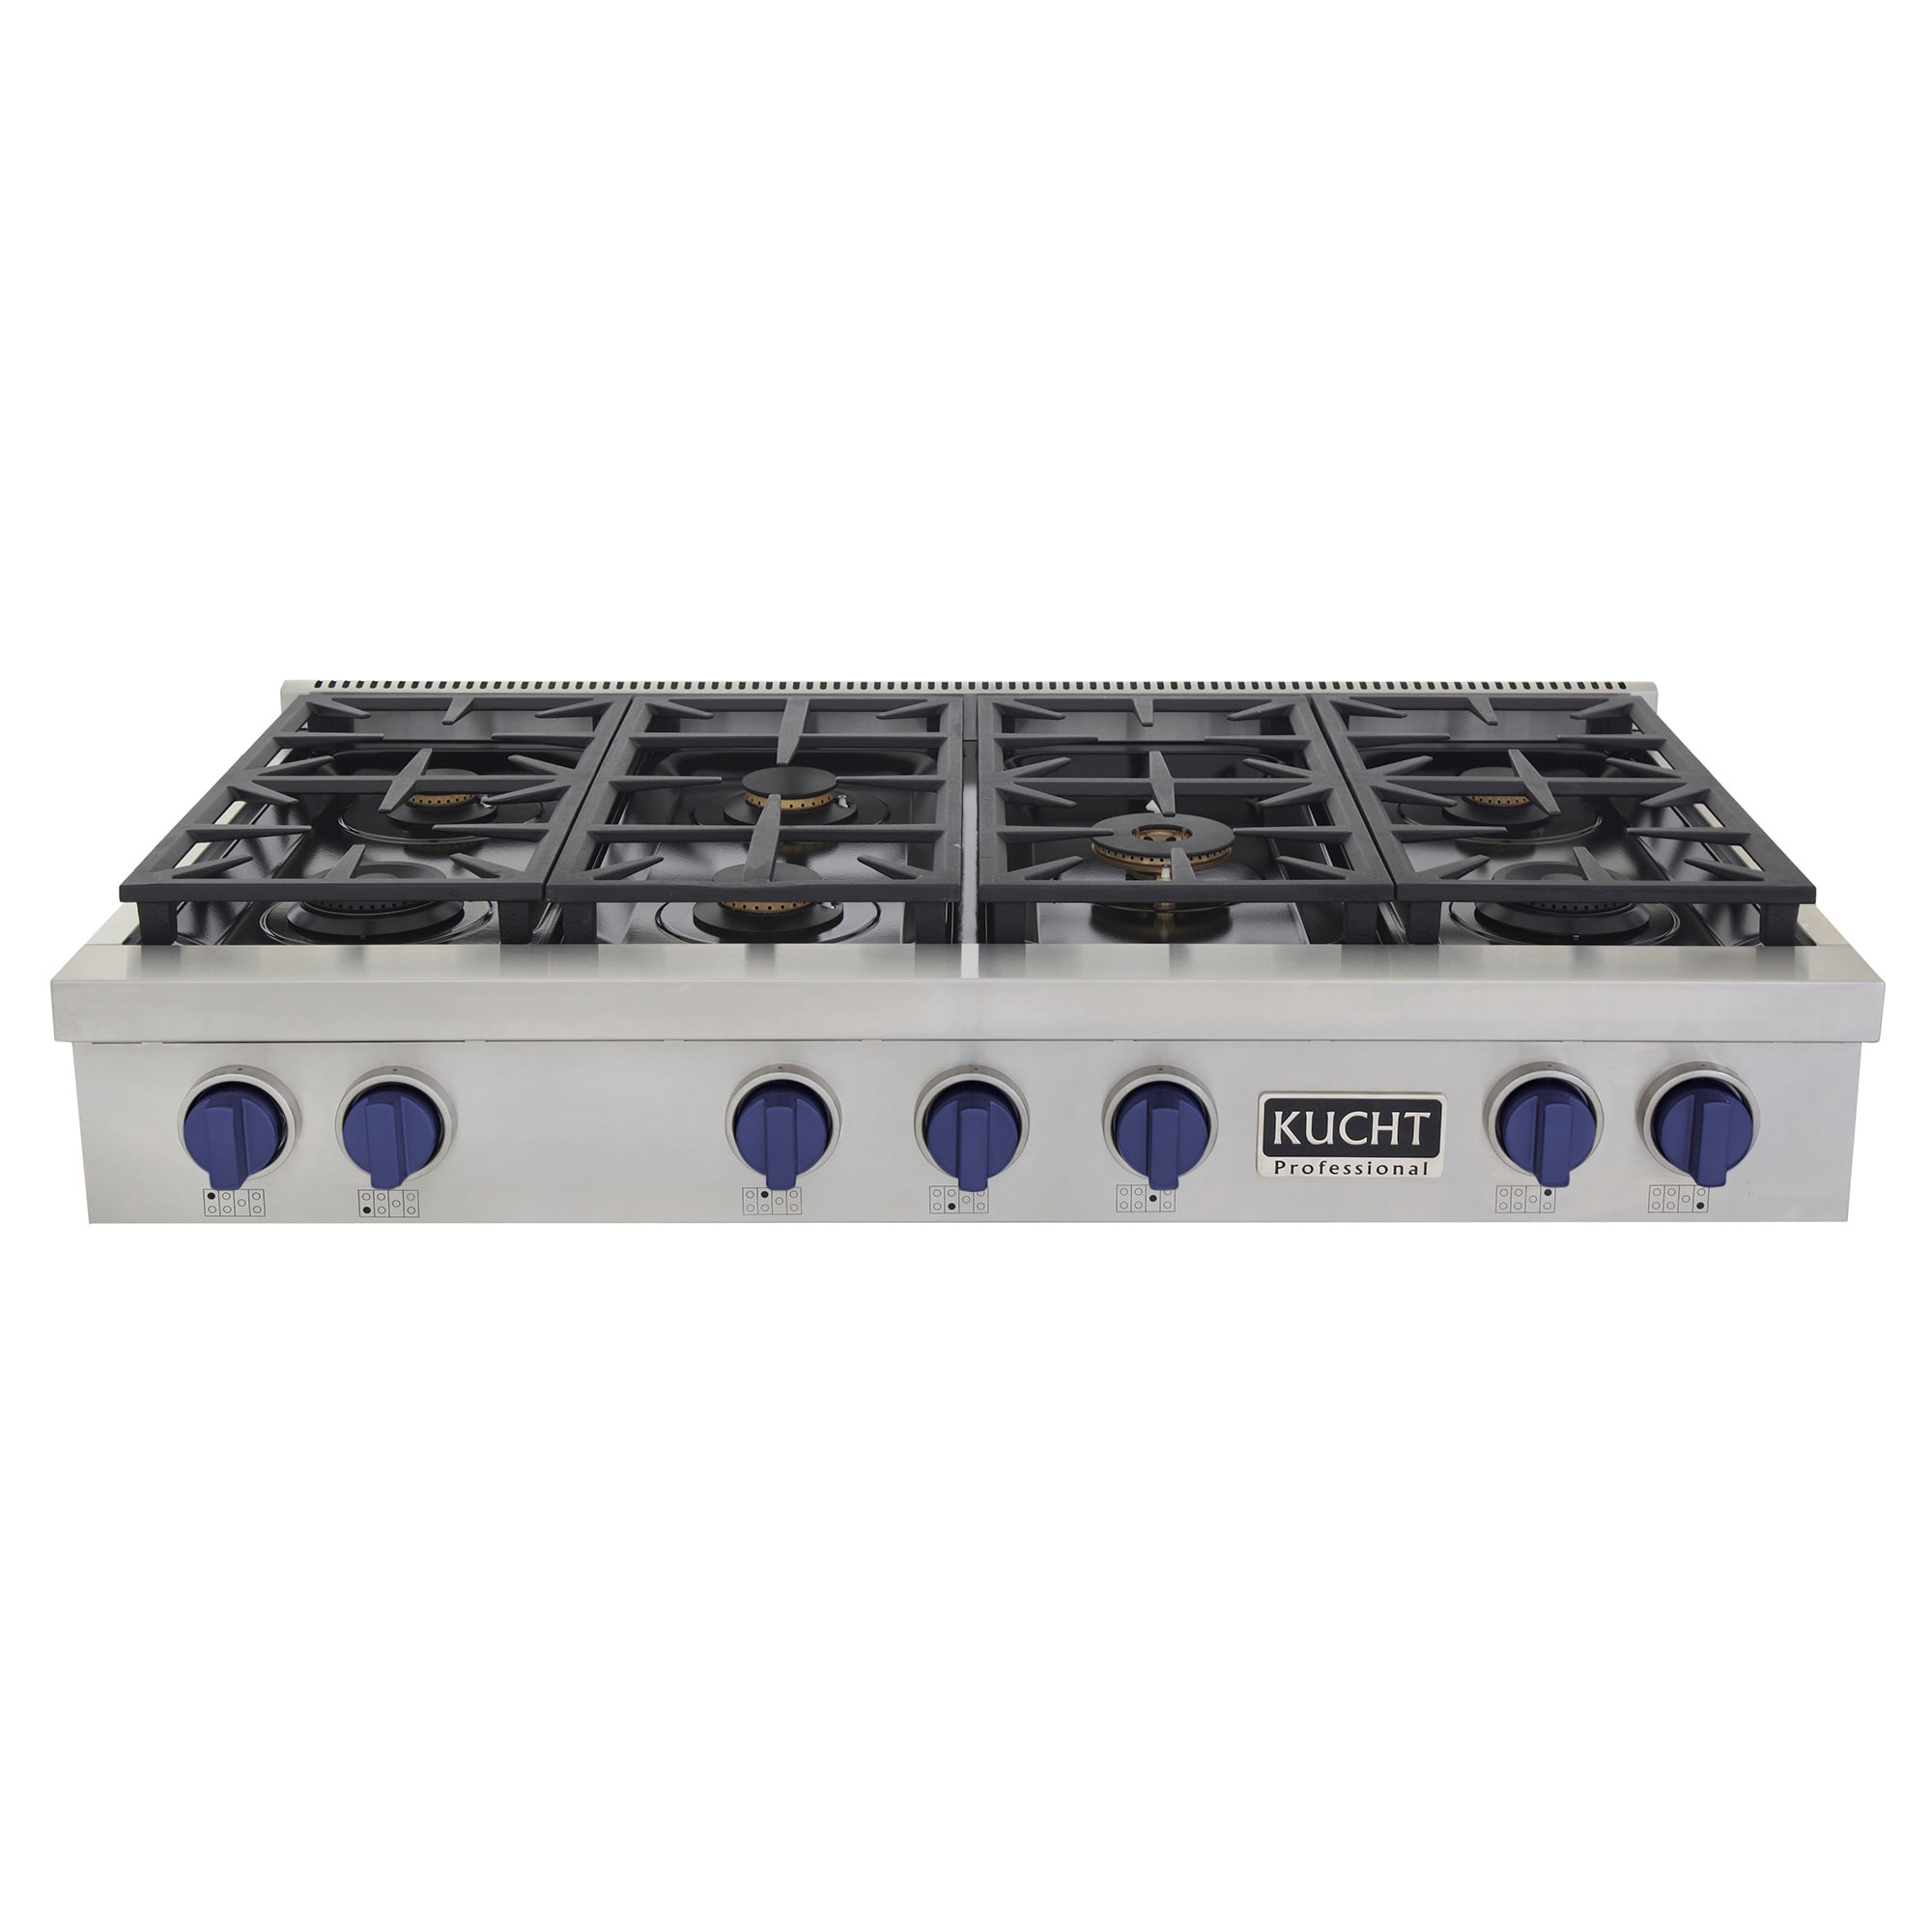 4 x EGO Black Oven Cooker Hob Flame Burner Hotplate Control Switch Knobs 